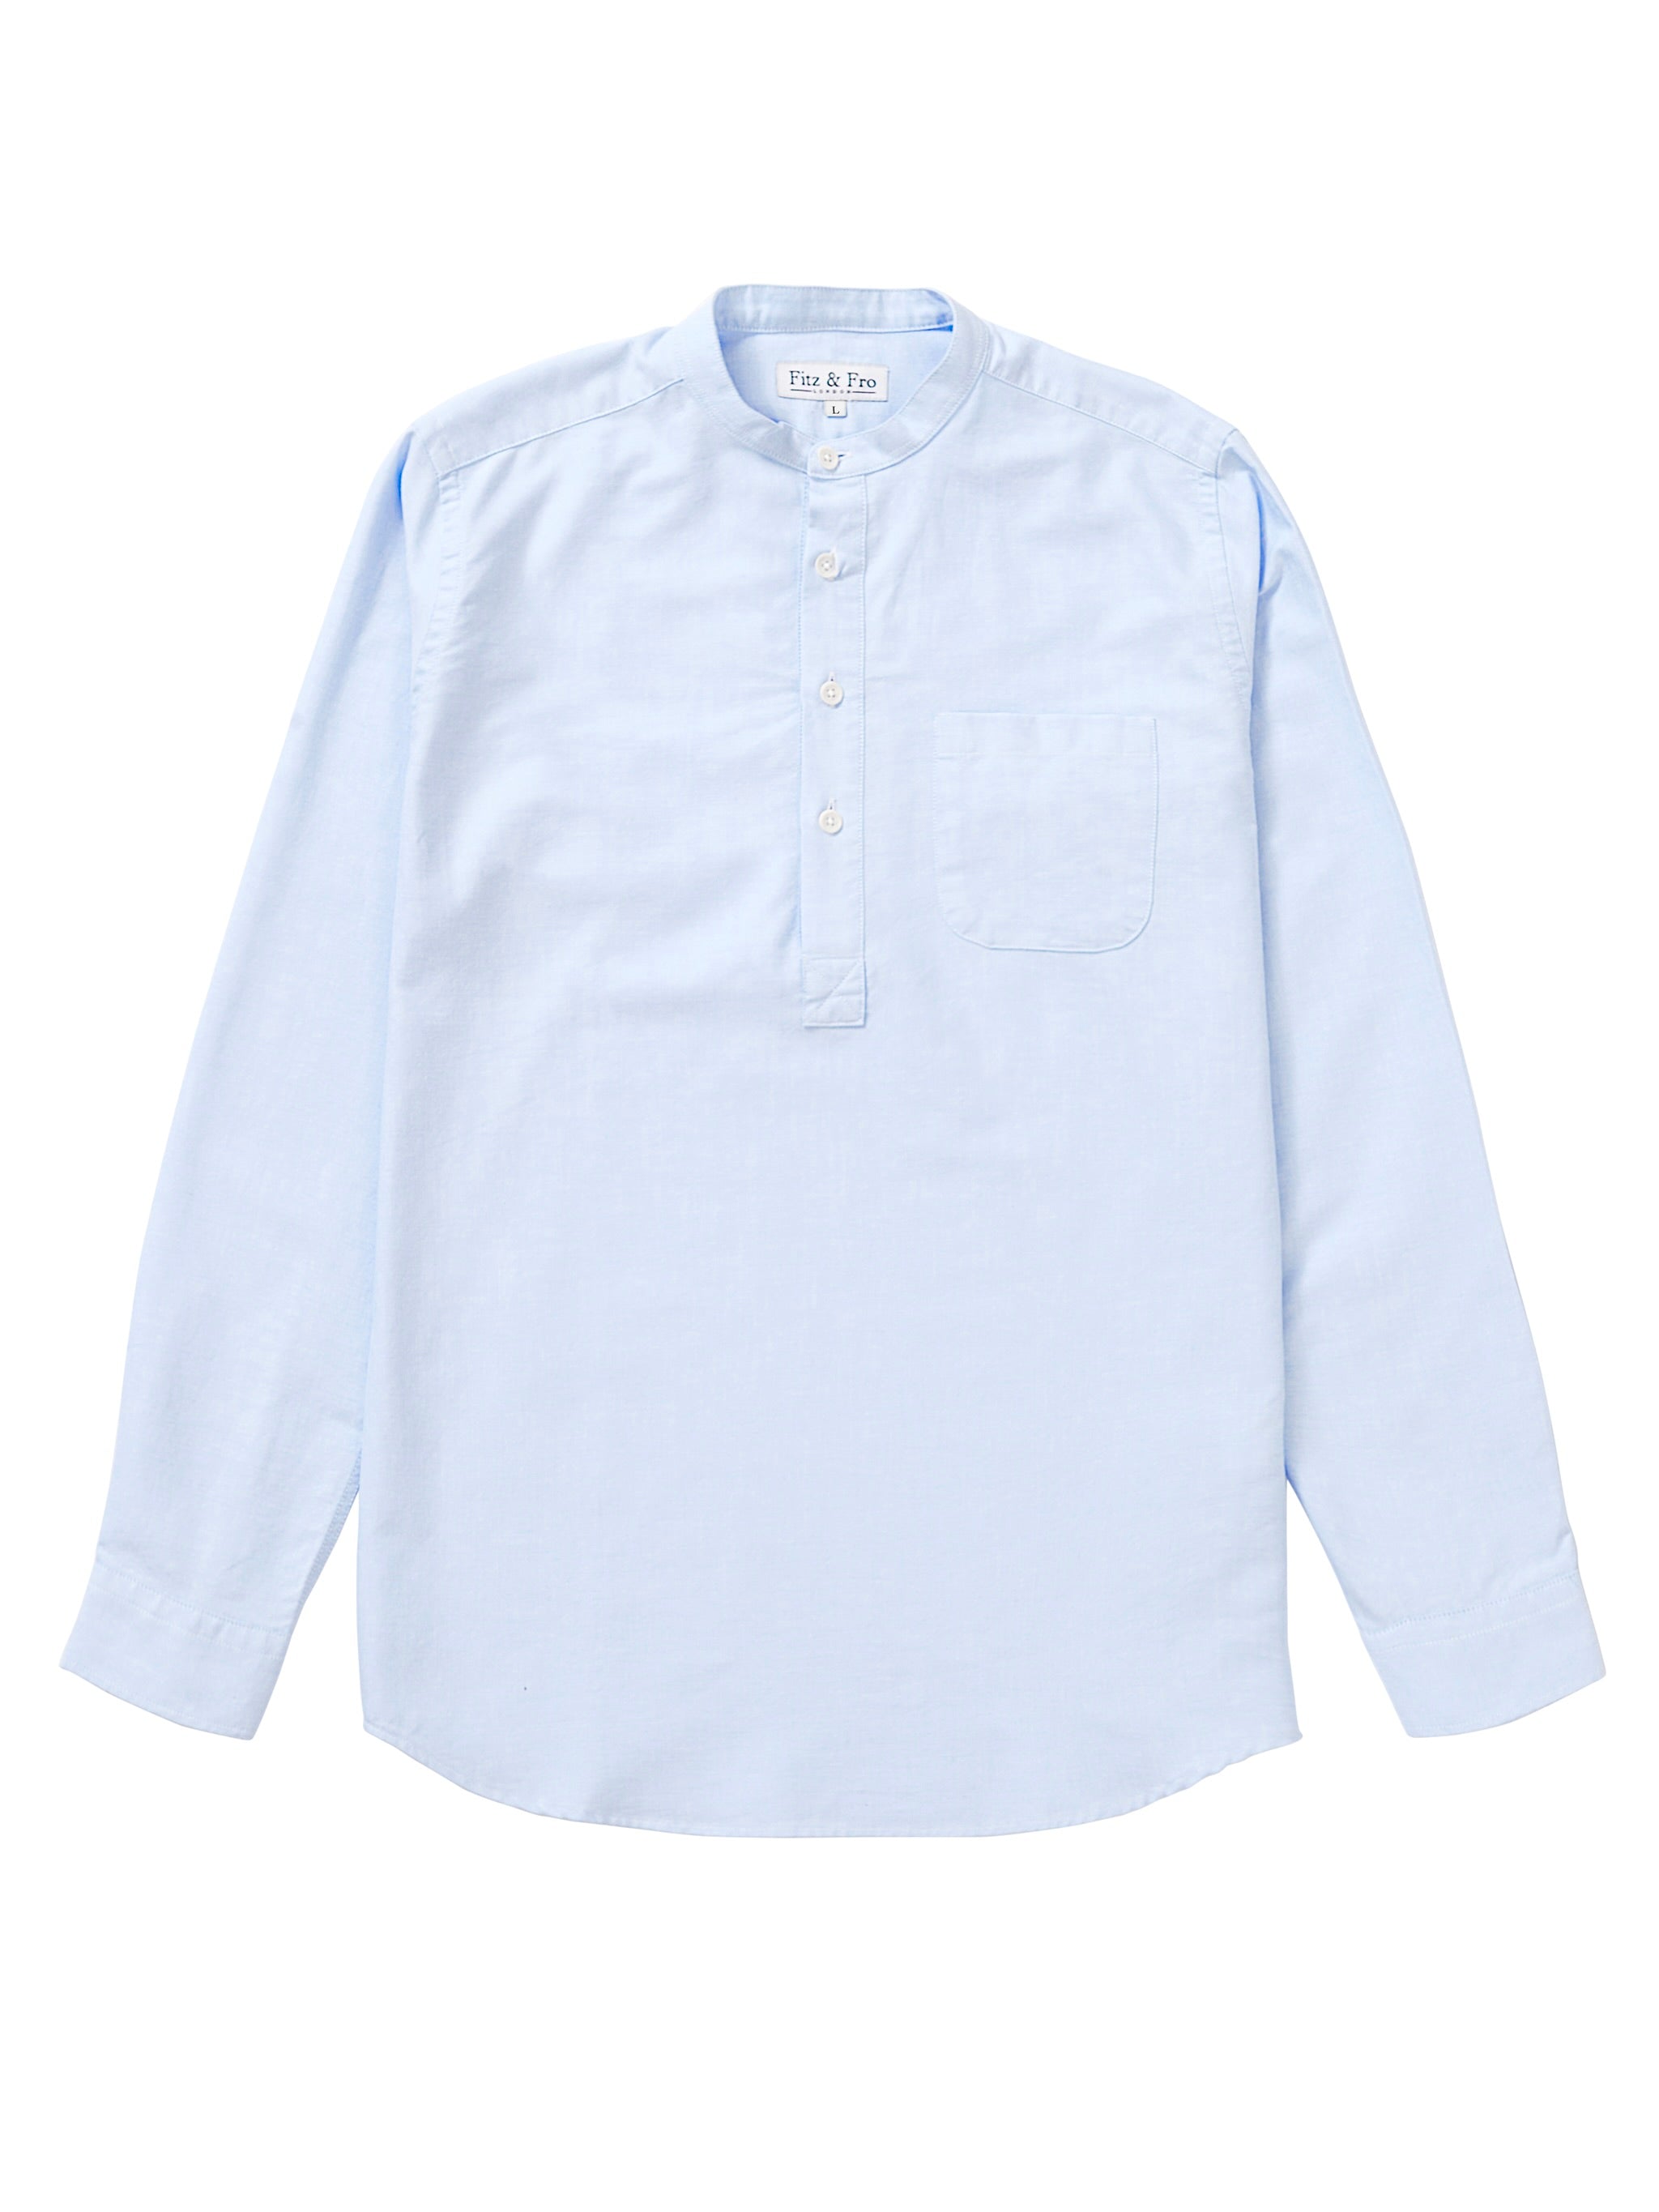 Fitz & Fro Organic Oxford Popover Shirt - Light Blue